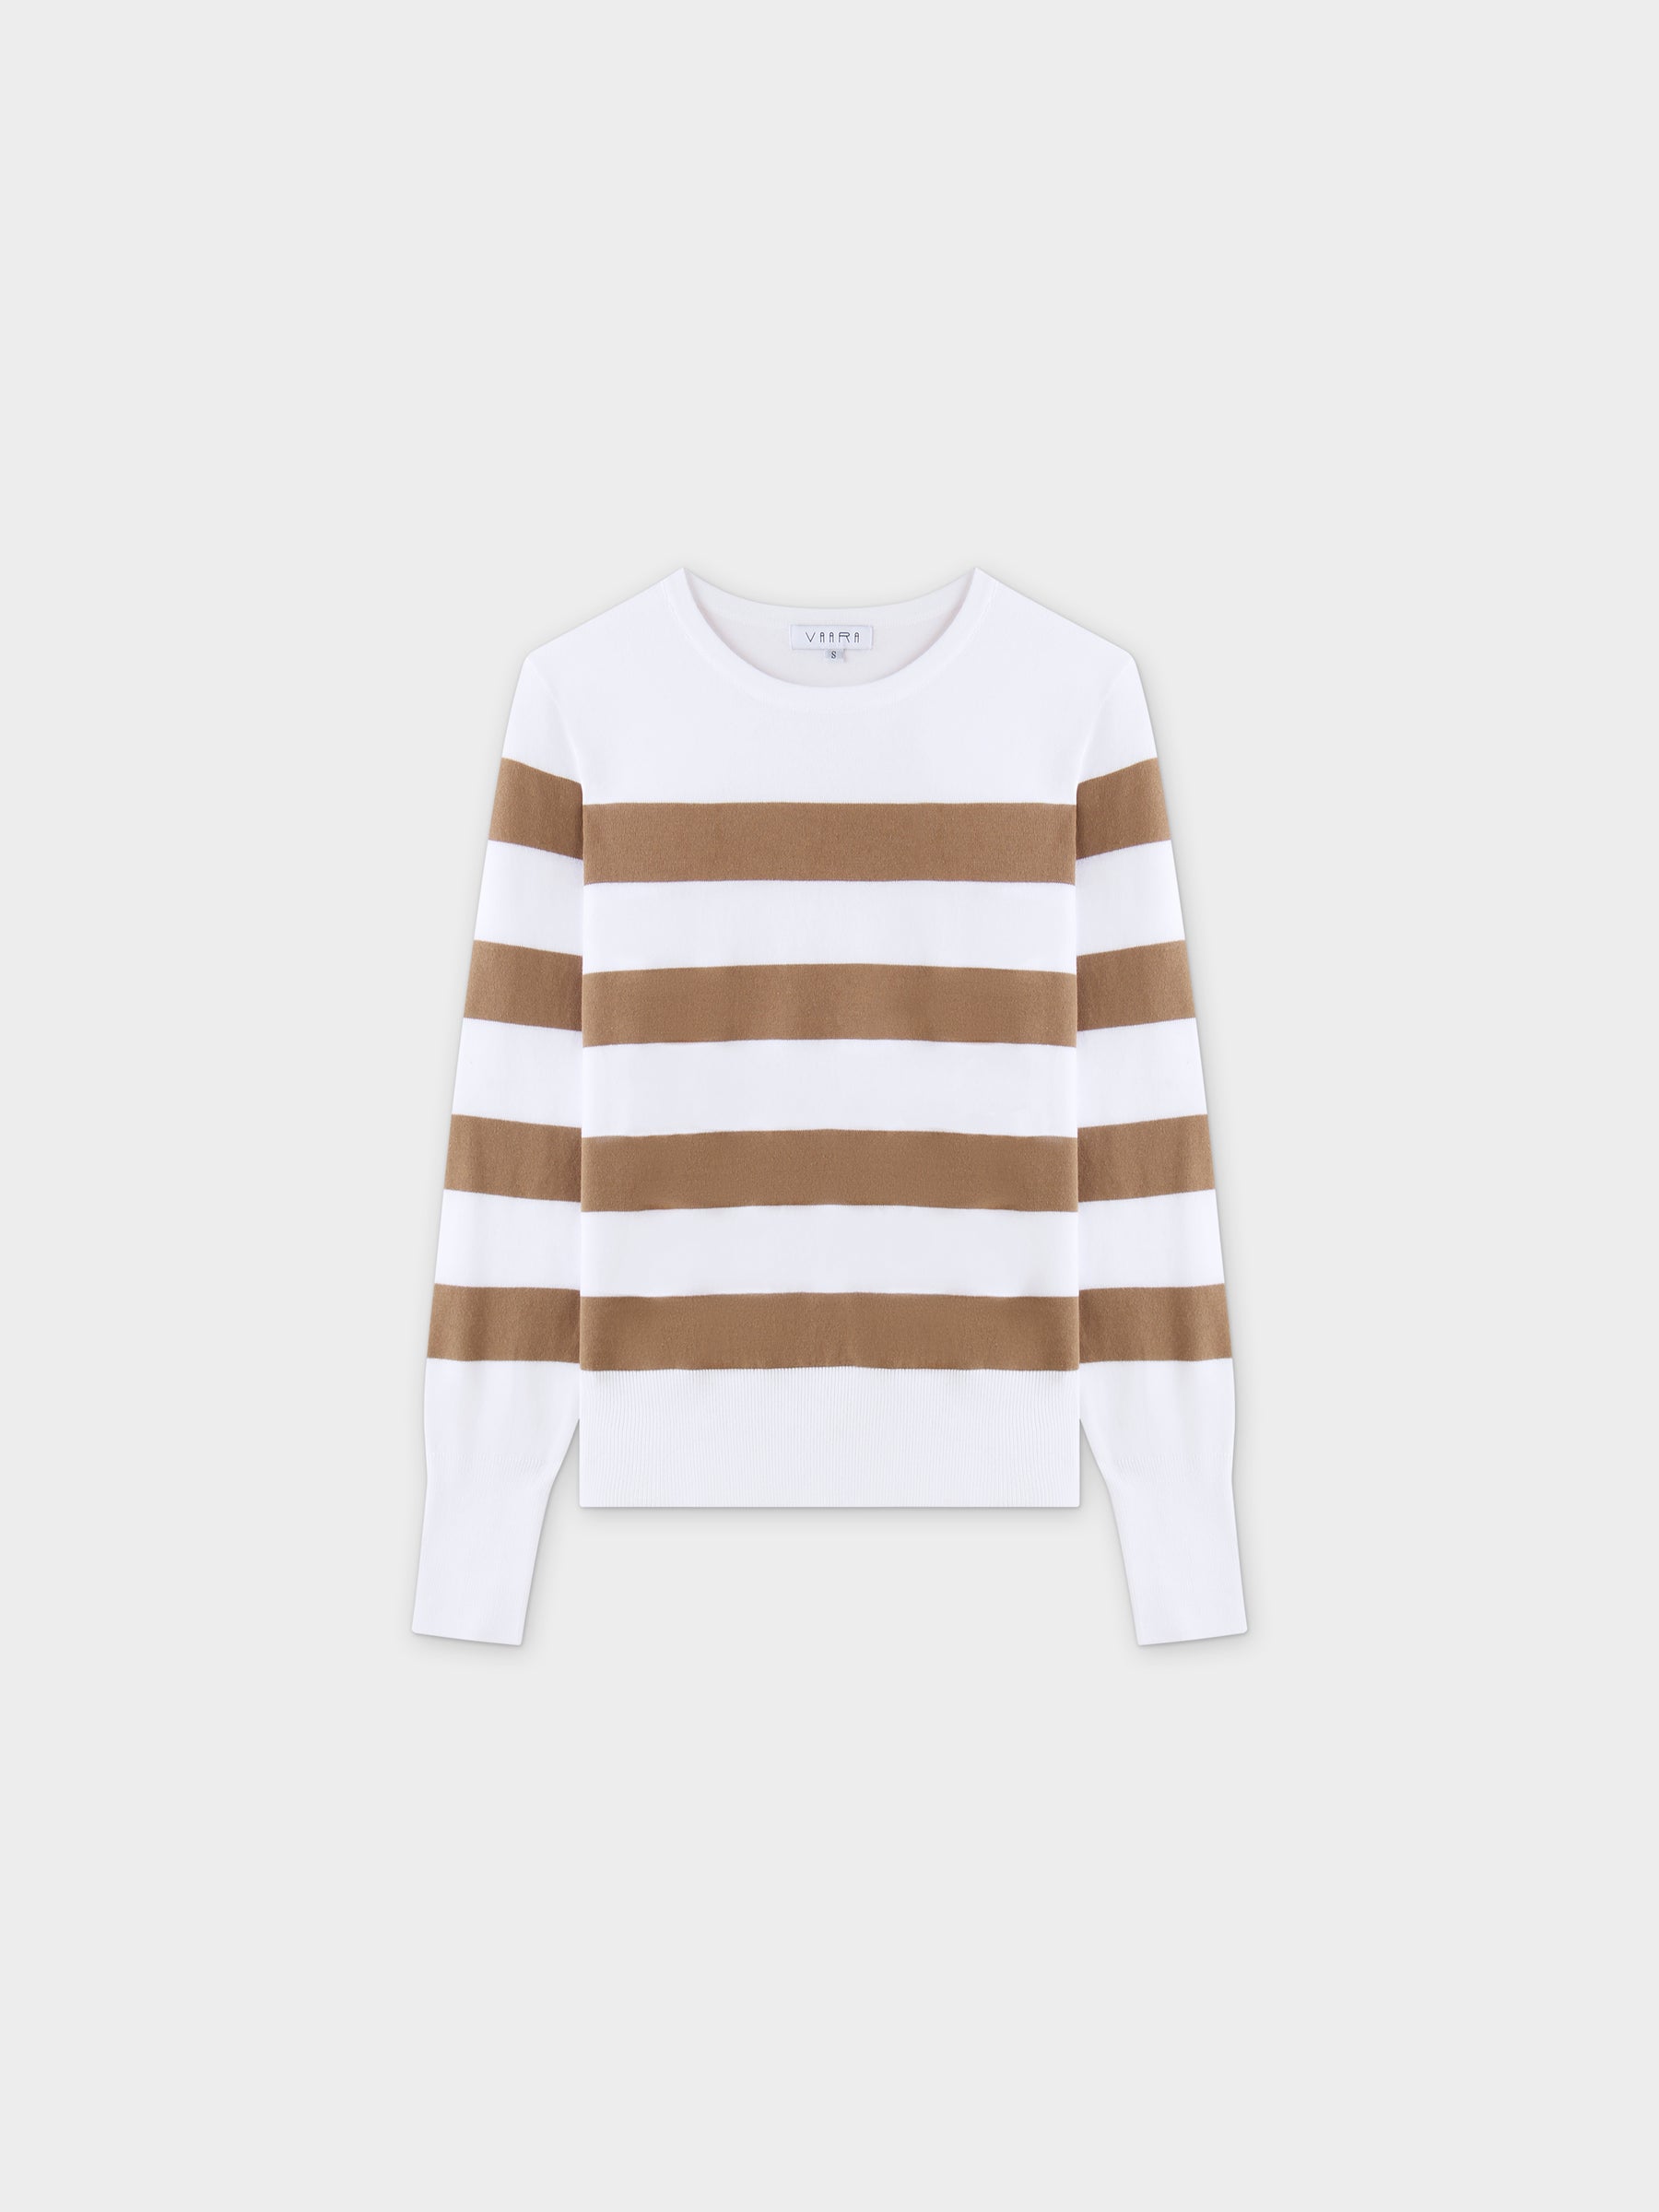 Striped Cotton Sweater-Tan